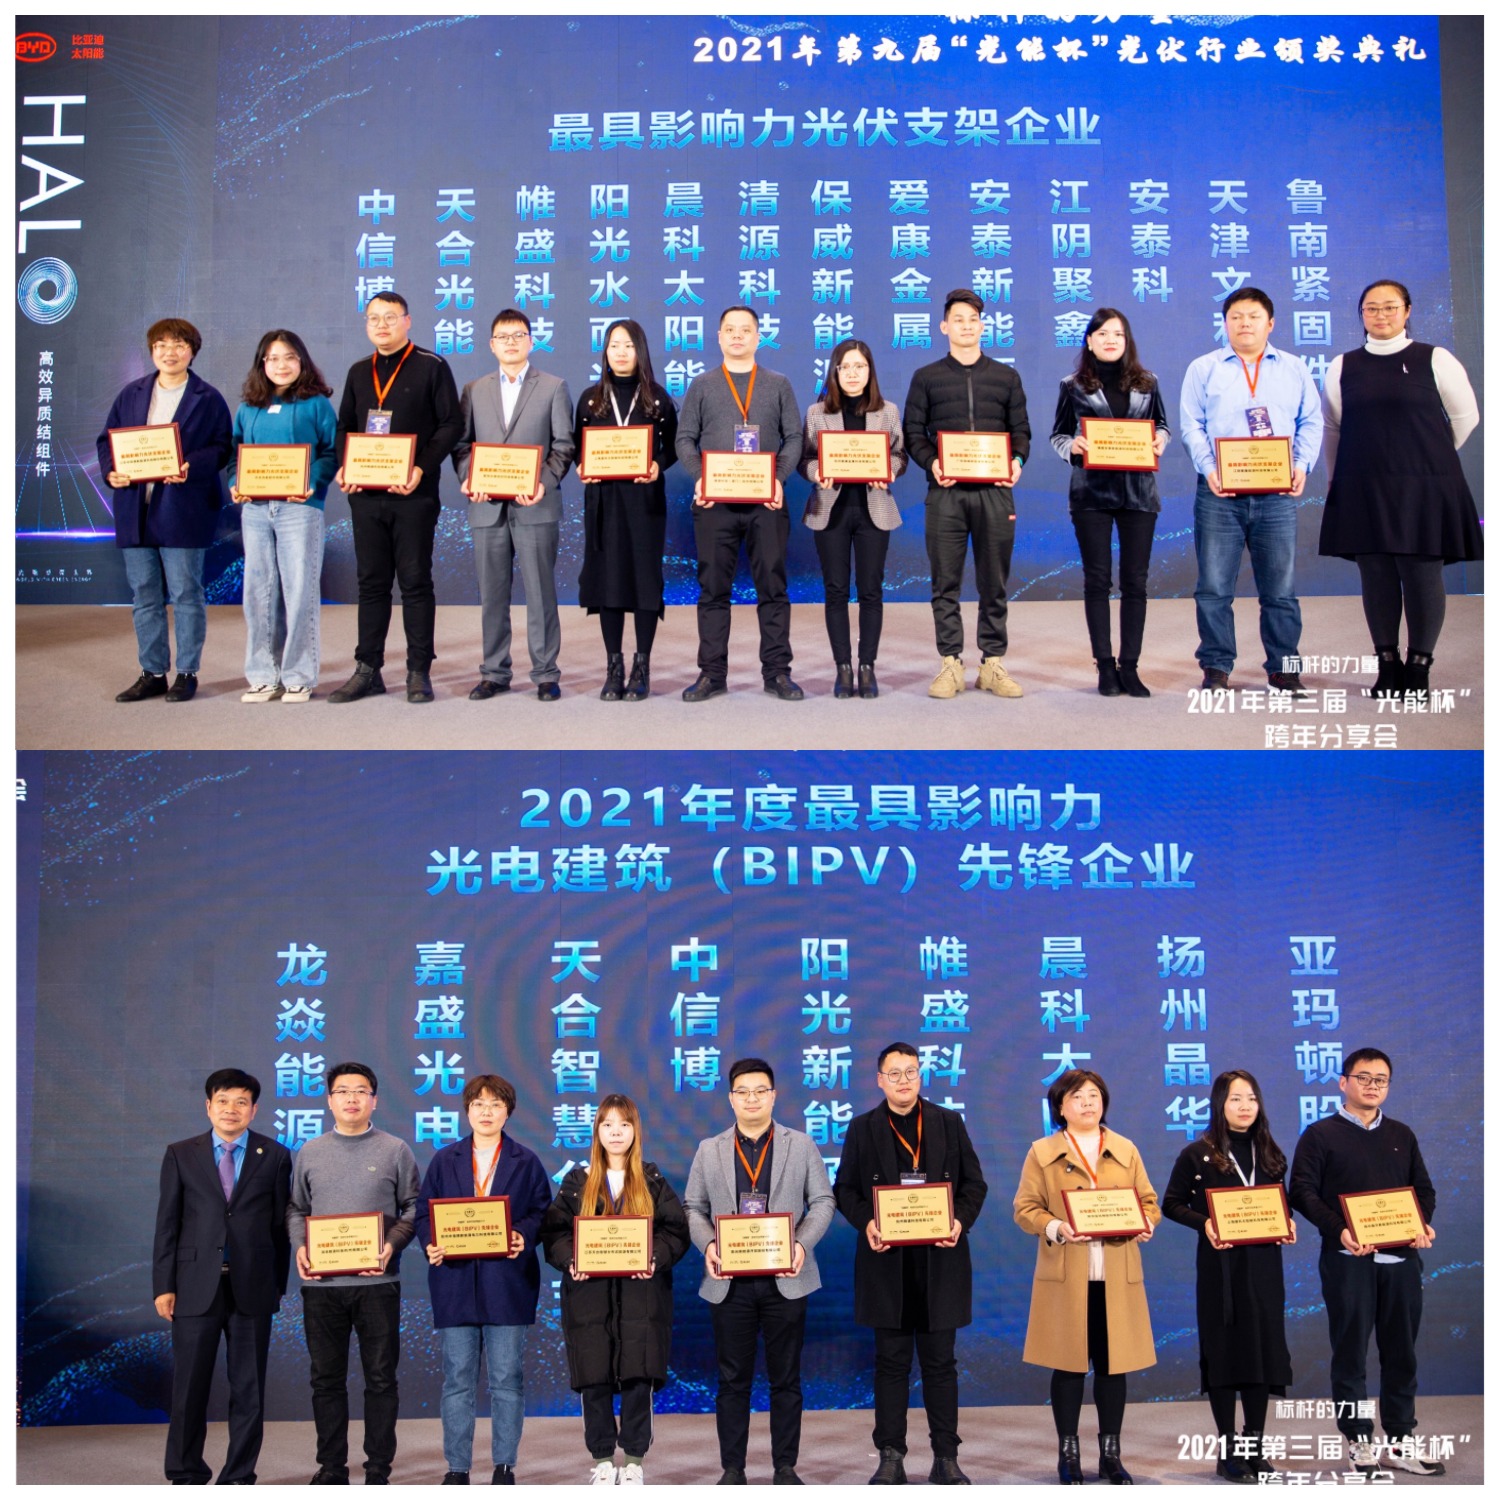 Chiko Solarは、「ソーラーエネルギーカップ」で最も影響力の太陽光架台/太陽光架台ビル（BIPV）のトップ企業の2つの賞を受賞しました。